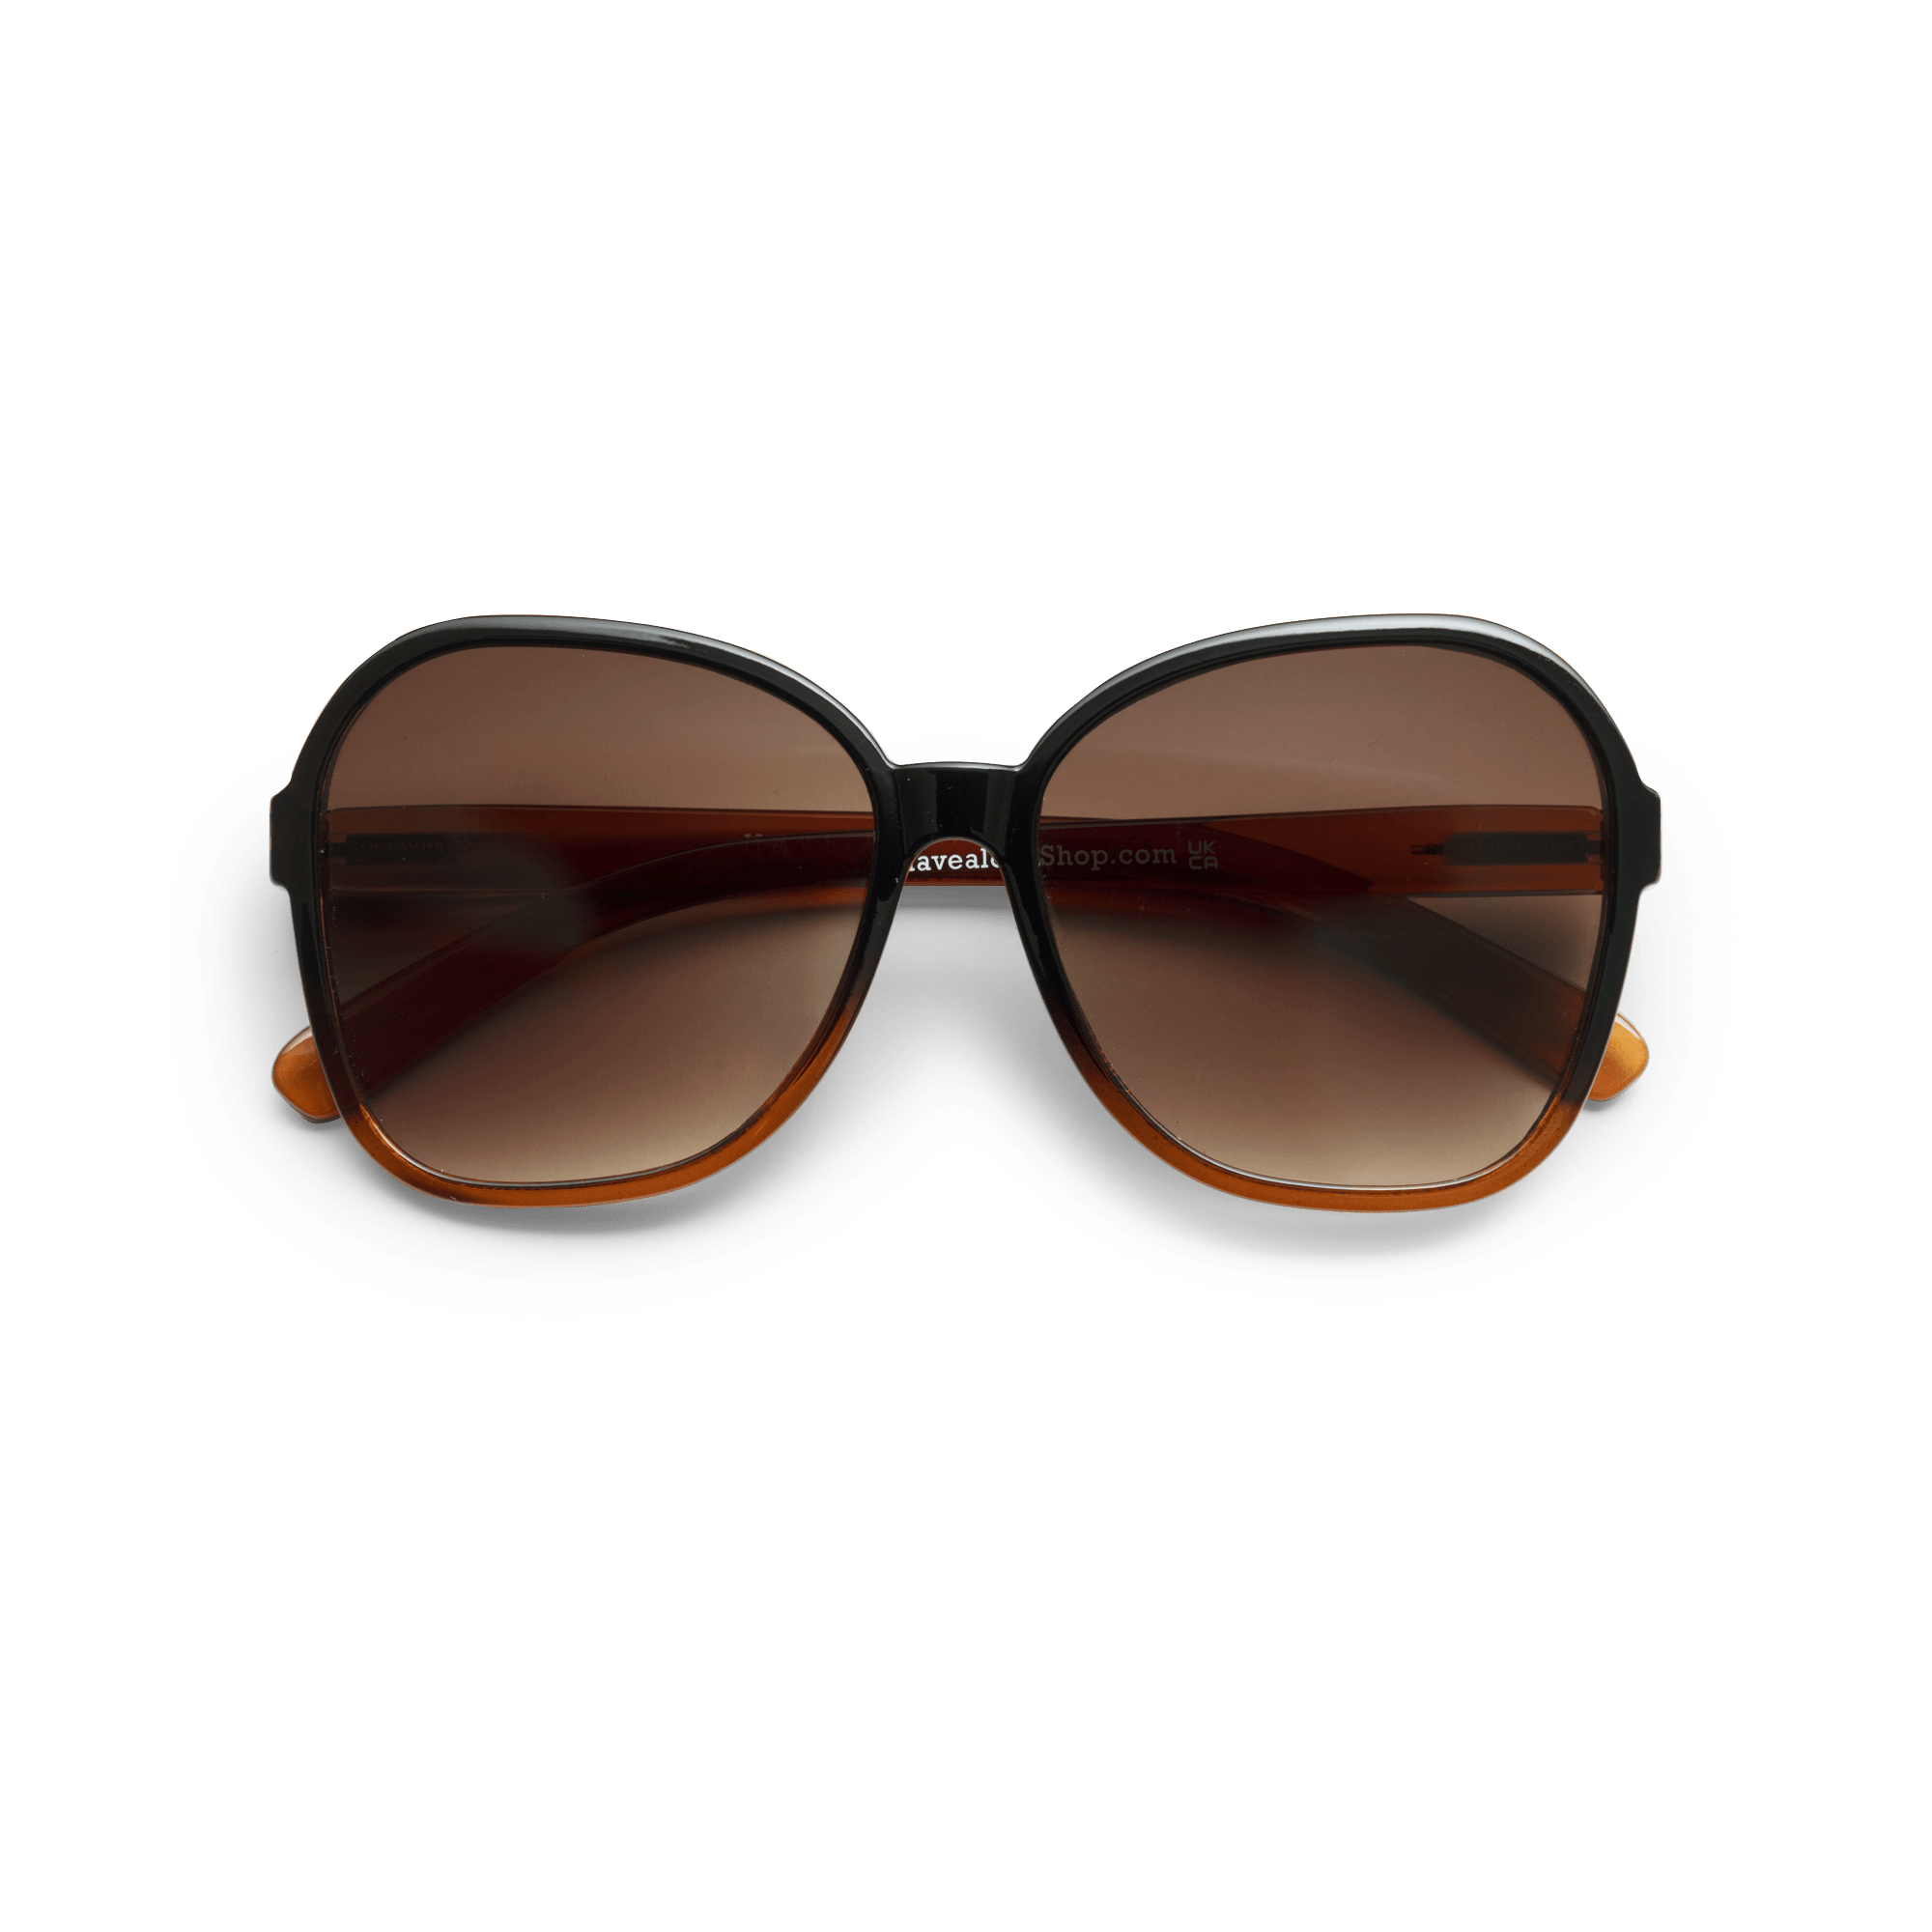 Sonnenbrillen Butterfly - brown/black aus Have A Look